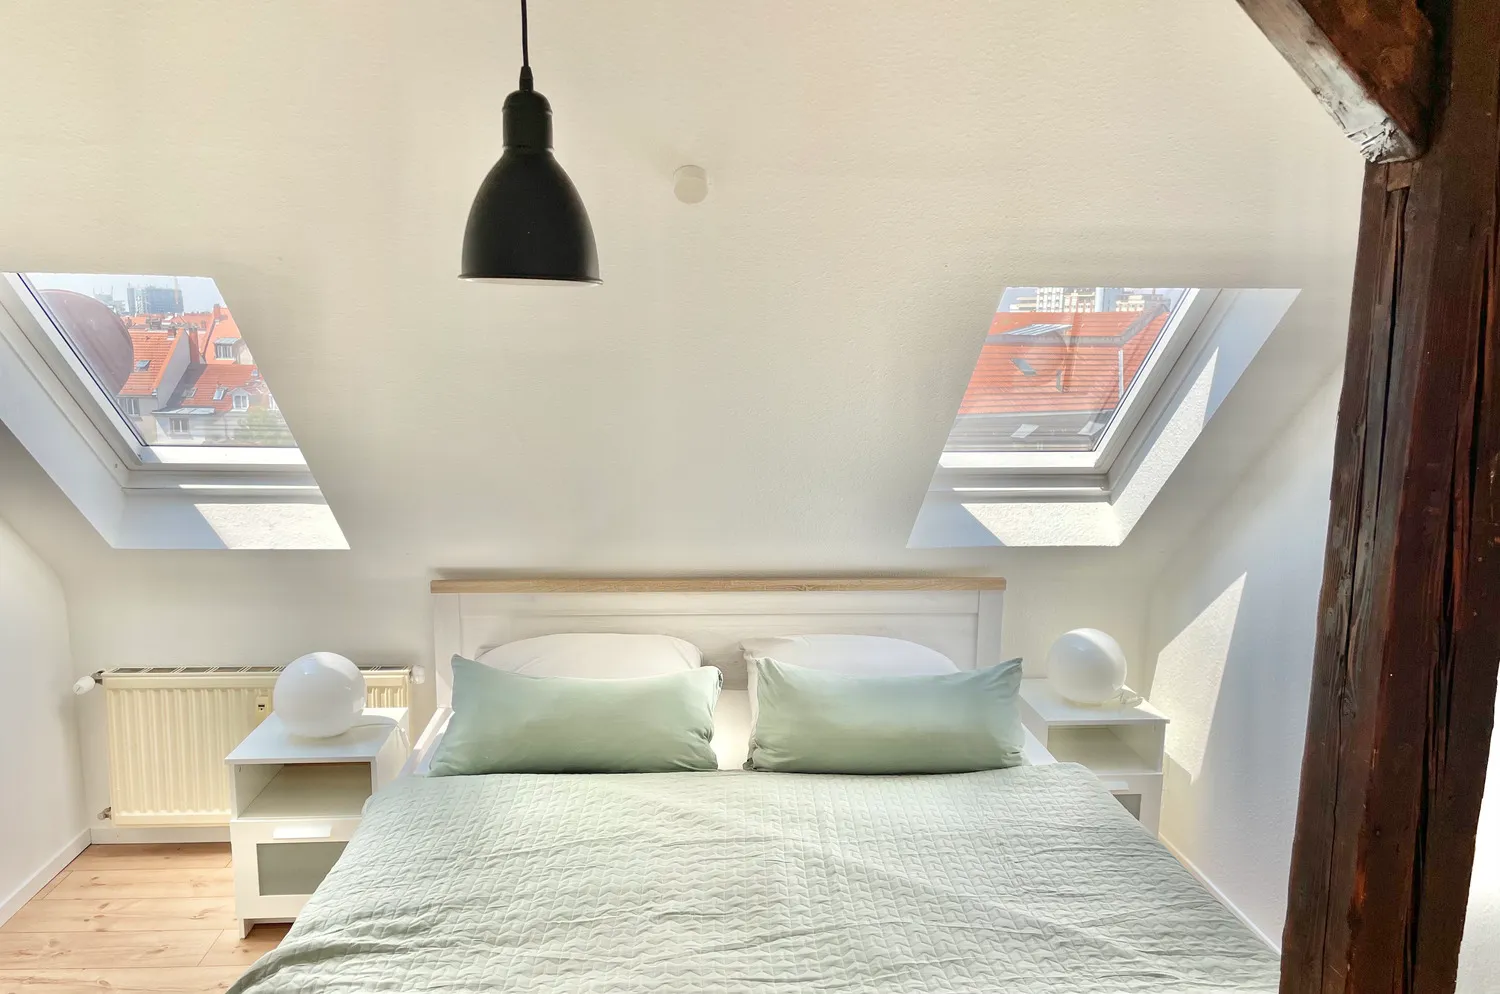 Komfortable Apartments in zentraler Lage Heidelberg